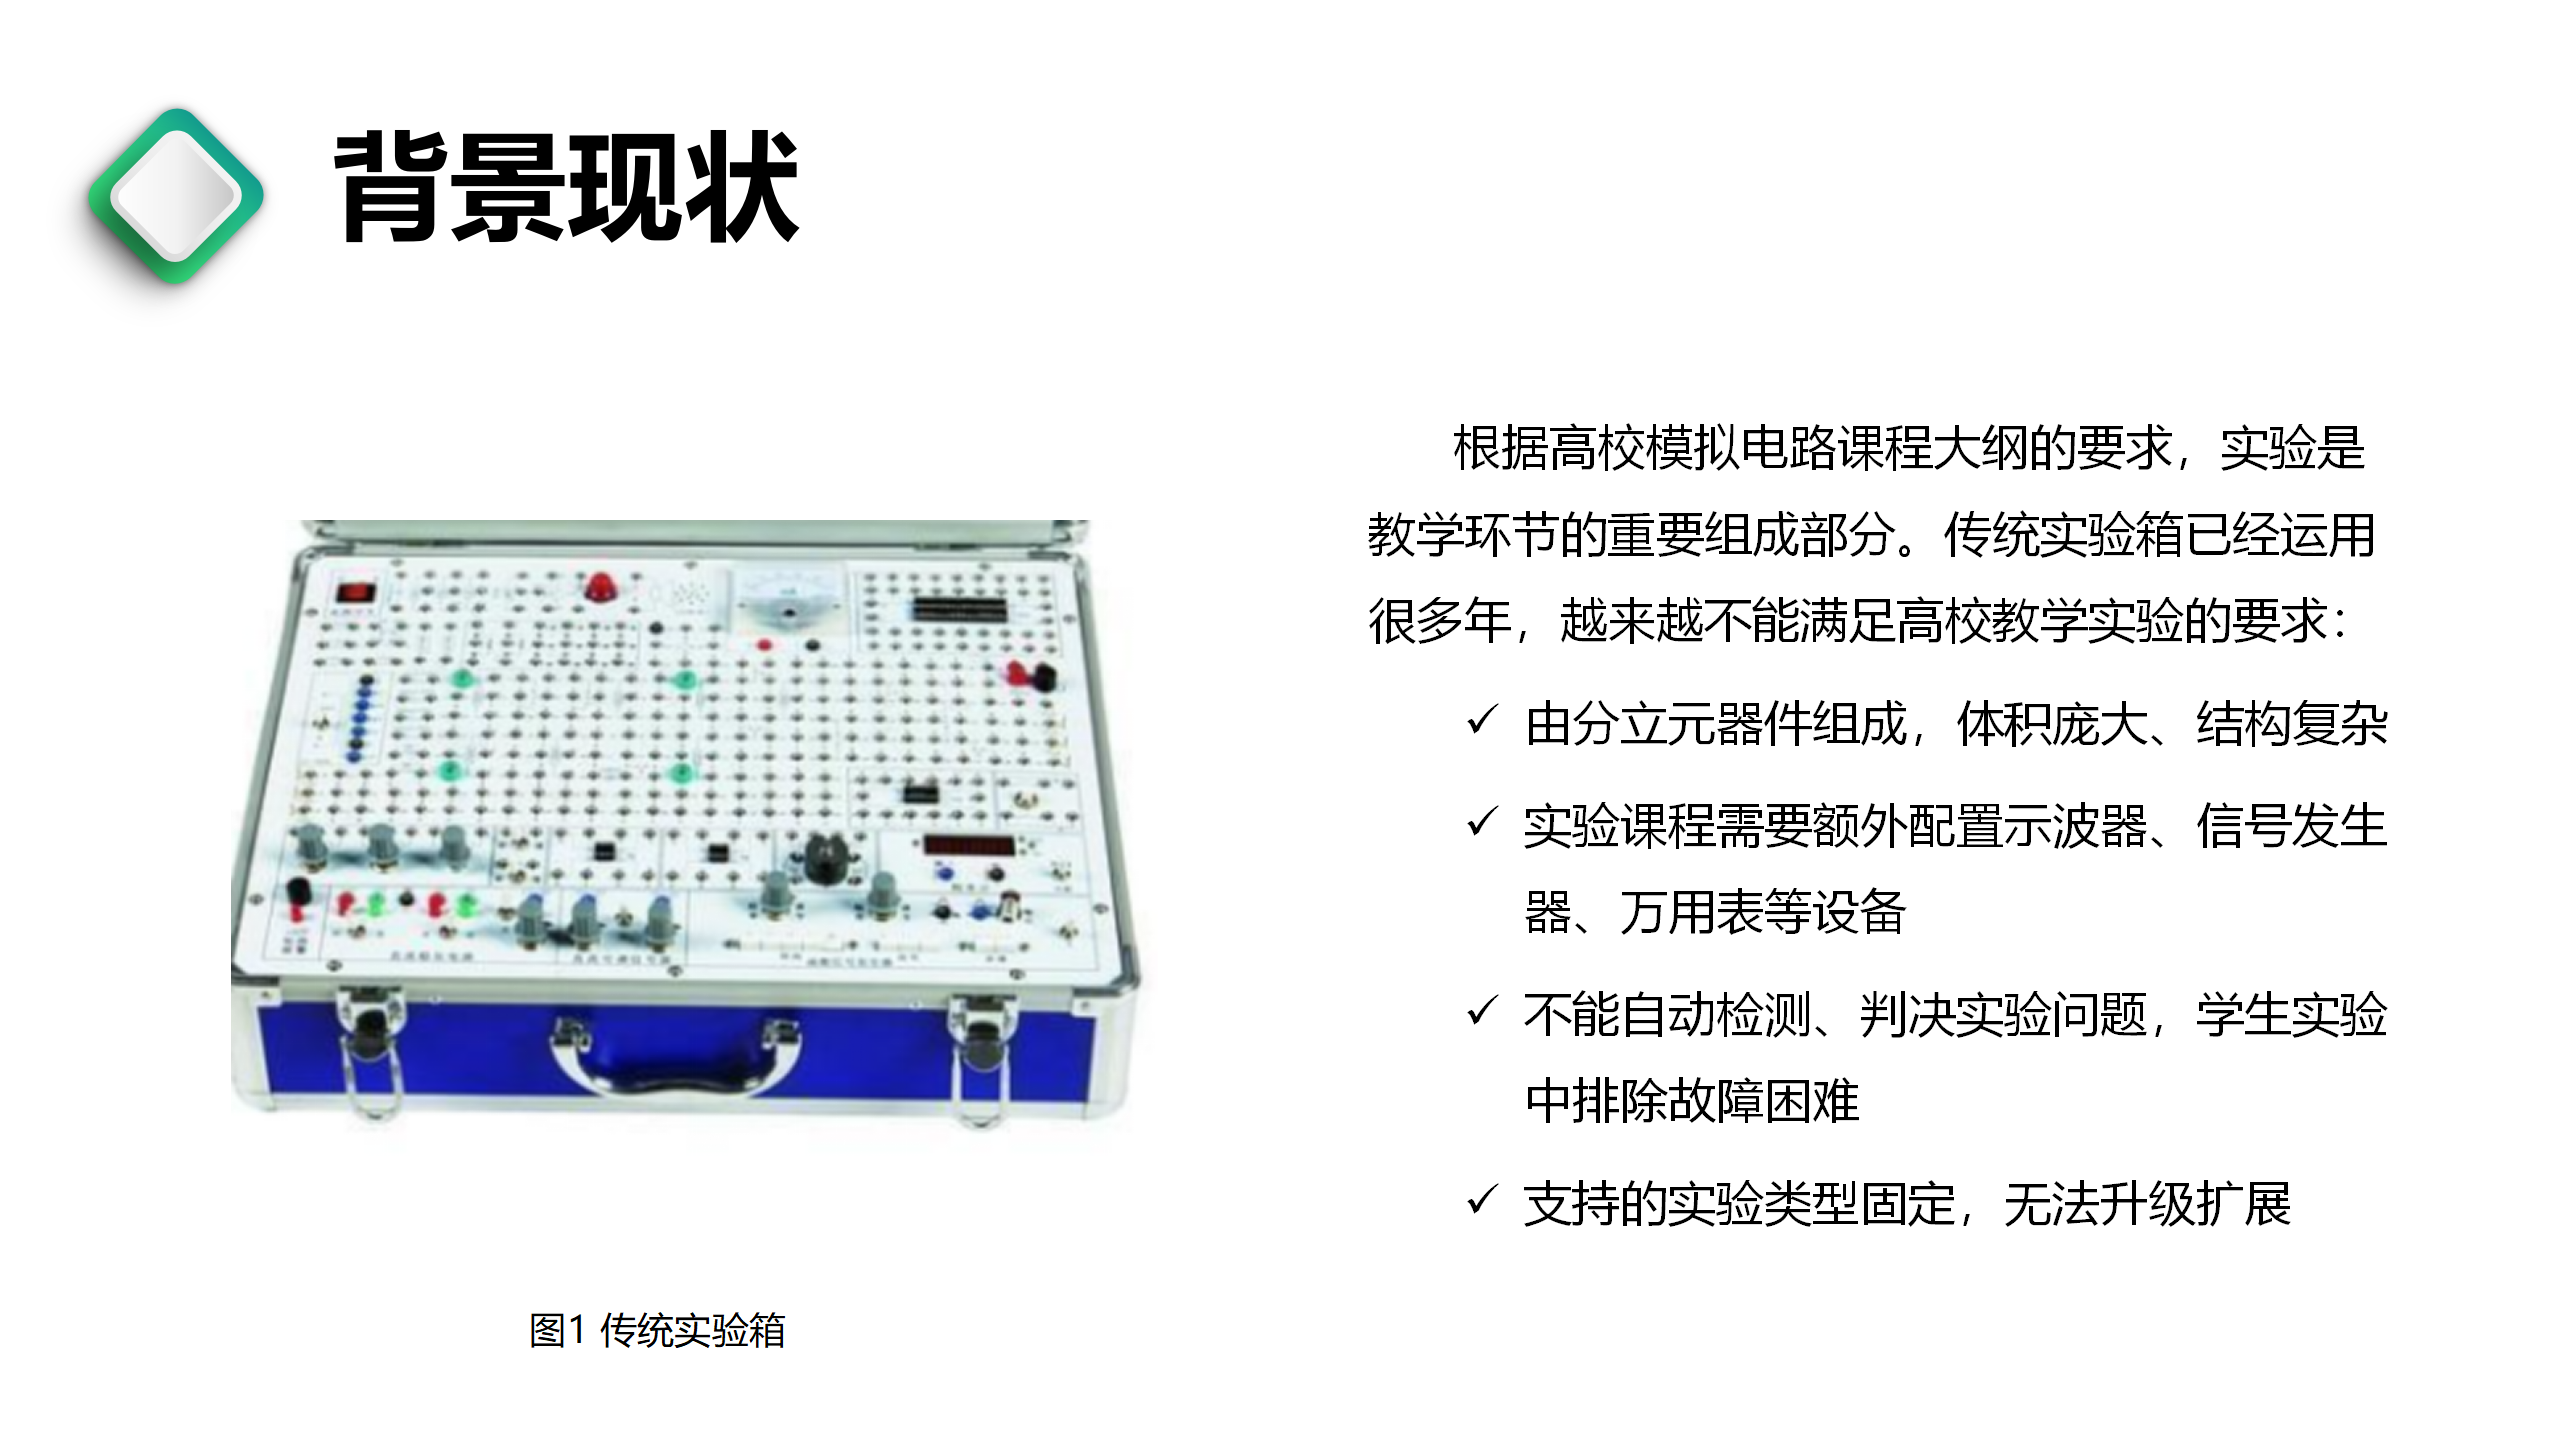 hssy-md-01新型 模拟电路实验箱